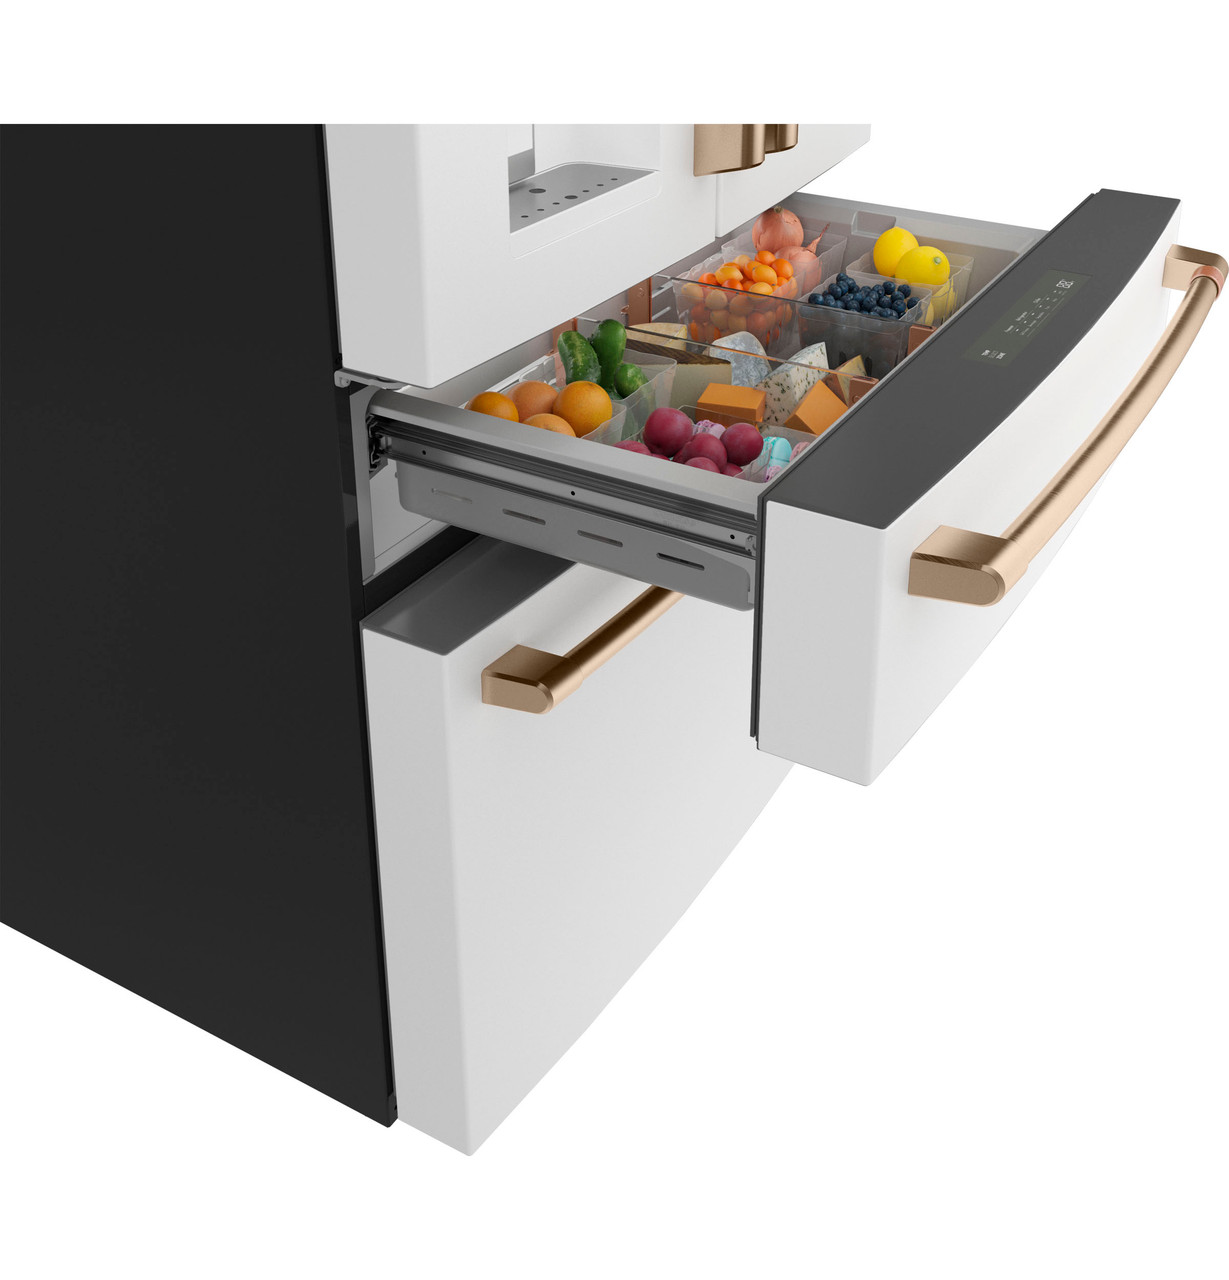 Café™ ENERGY STAR® 23.1 Cu. Ft. Smart Counter-Depth French-Door Refrigerator  - CWE23SP4MW2 - Cafe Appliances